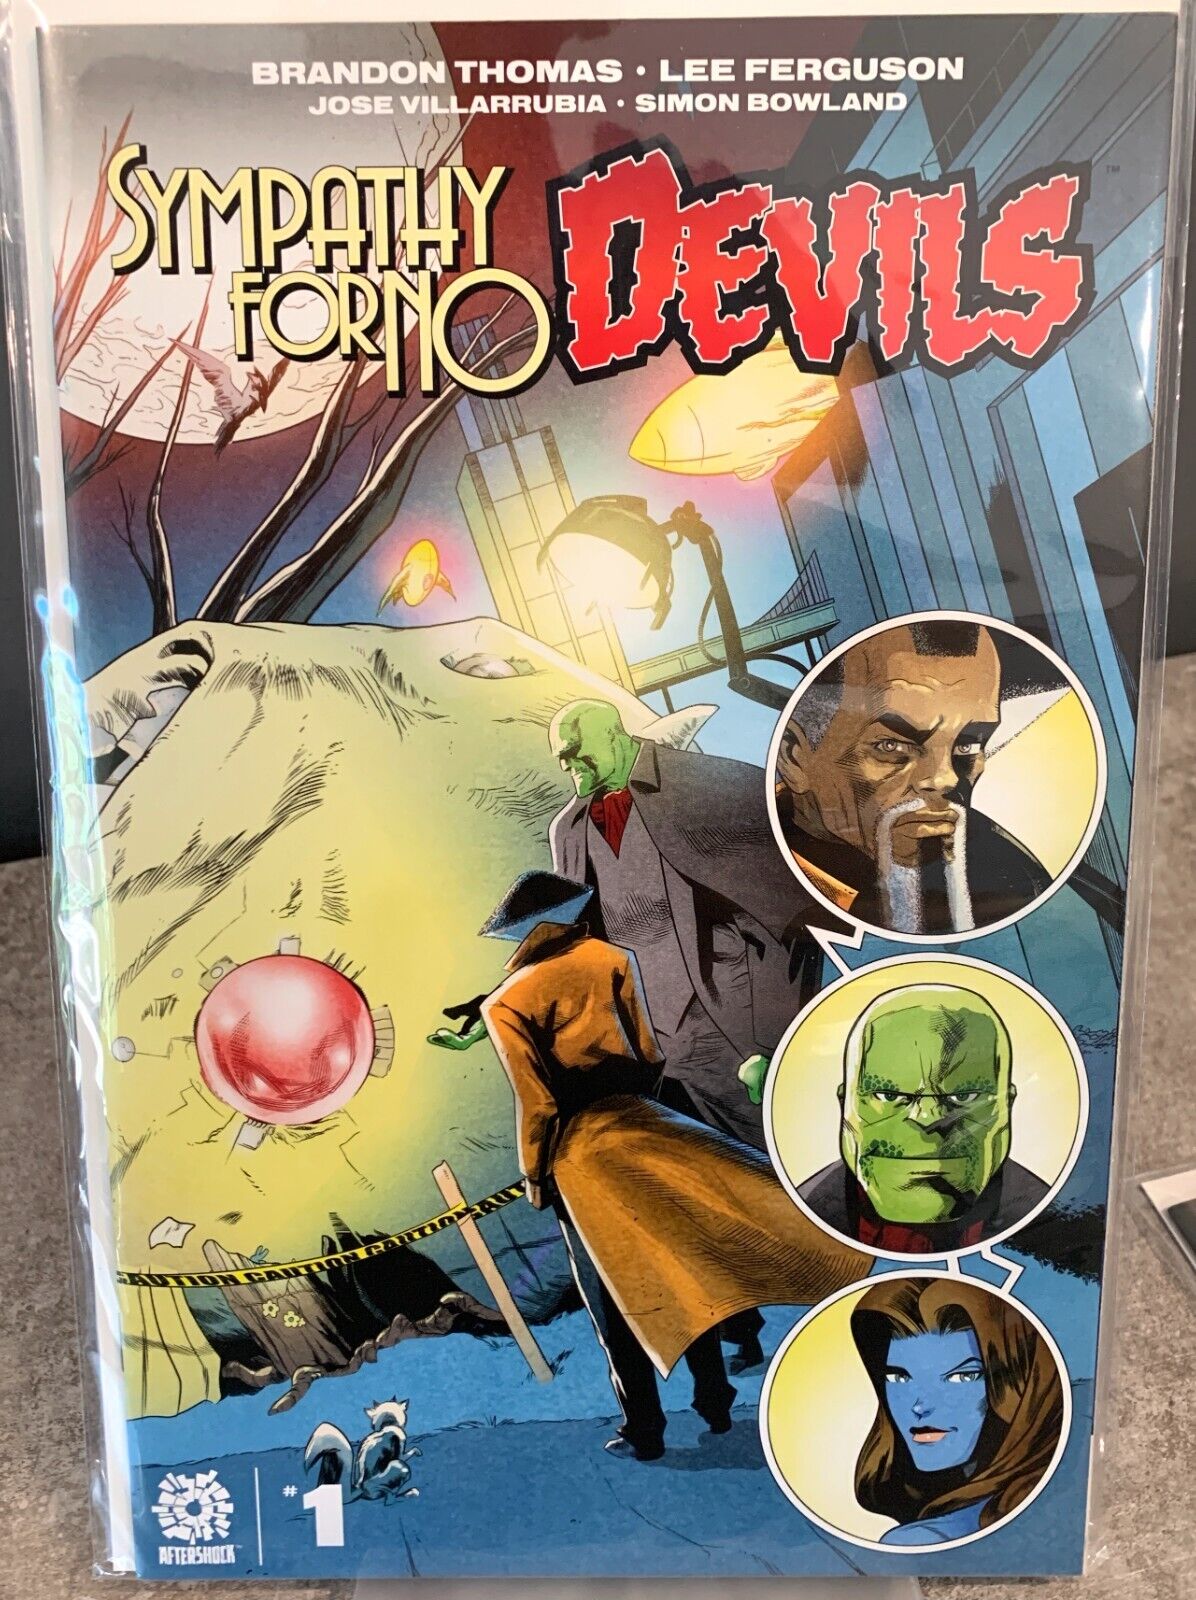 Sympathy For No Devils #1 (AfterShock Comics, 2020)